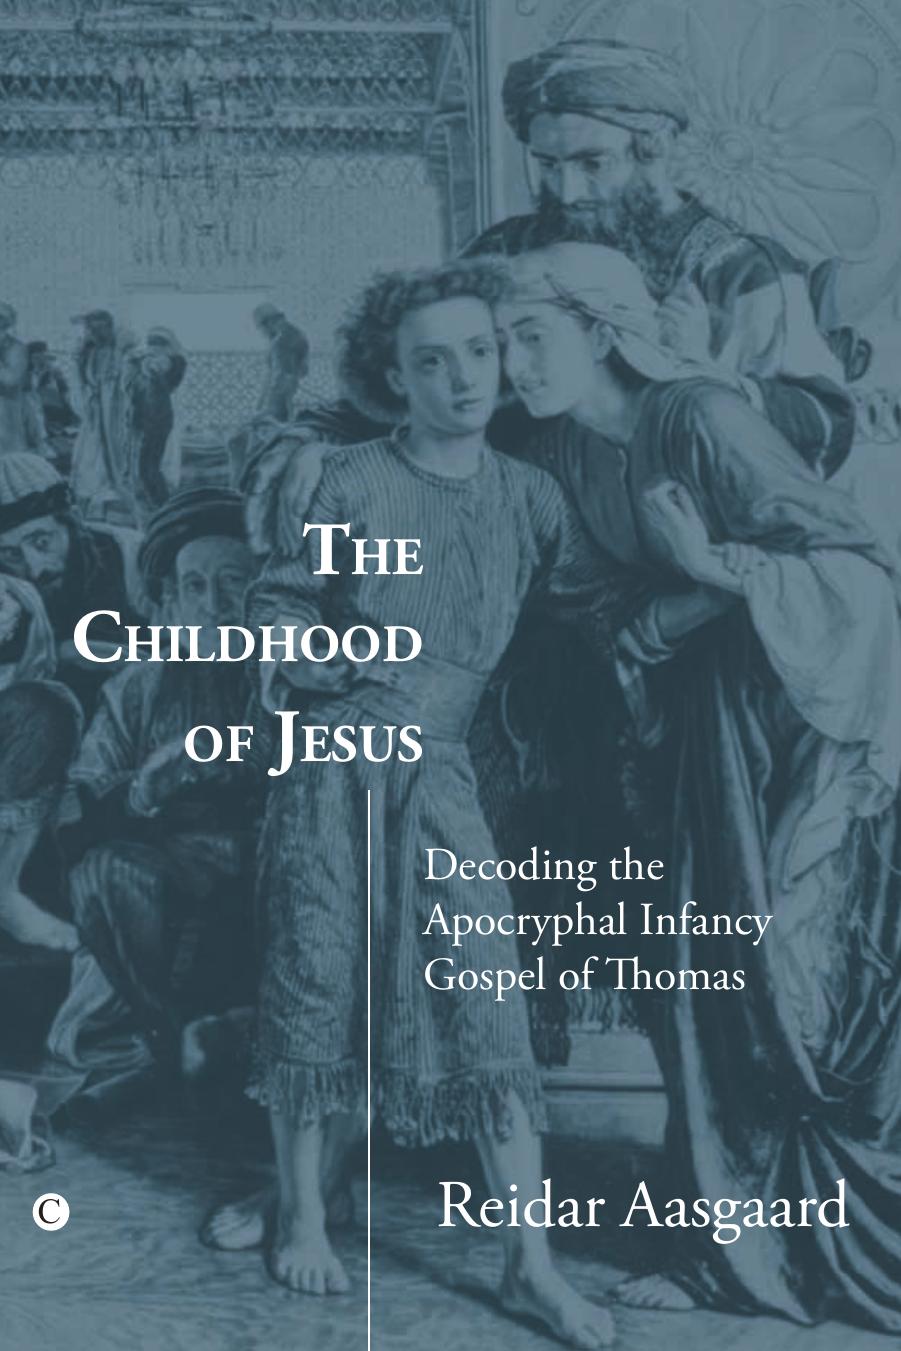 The Childhood of Jesus: Decoding the Apocryphal Infancy Gospel of Thomas